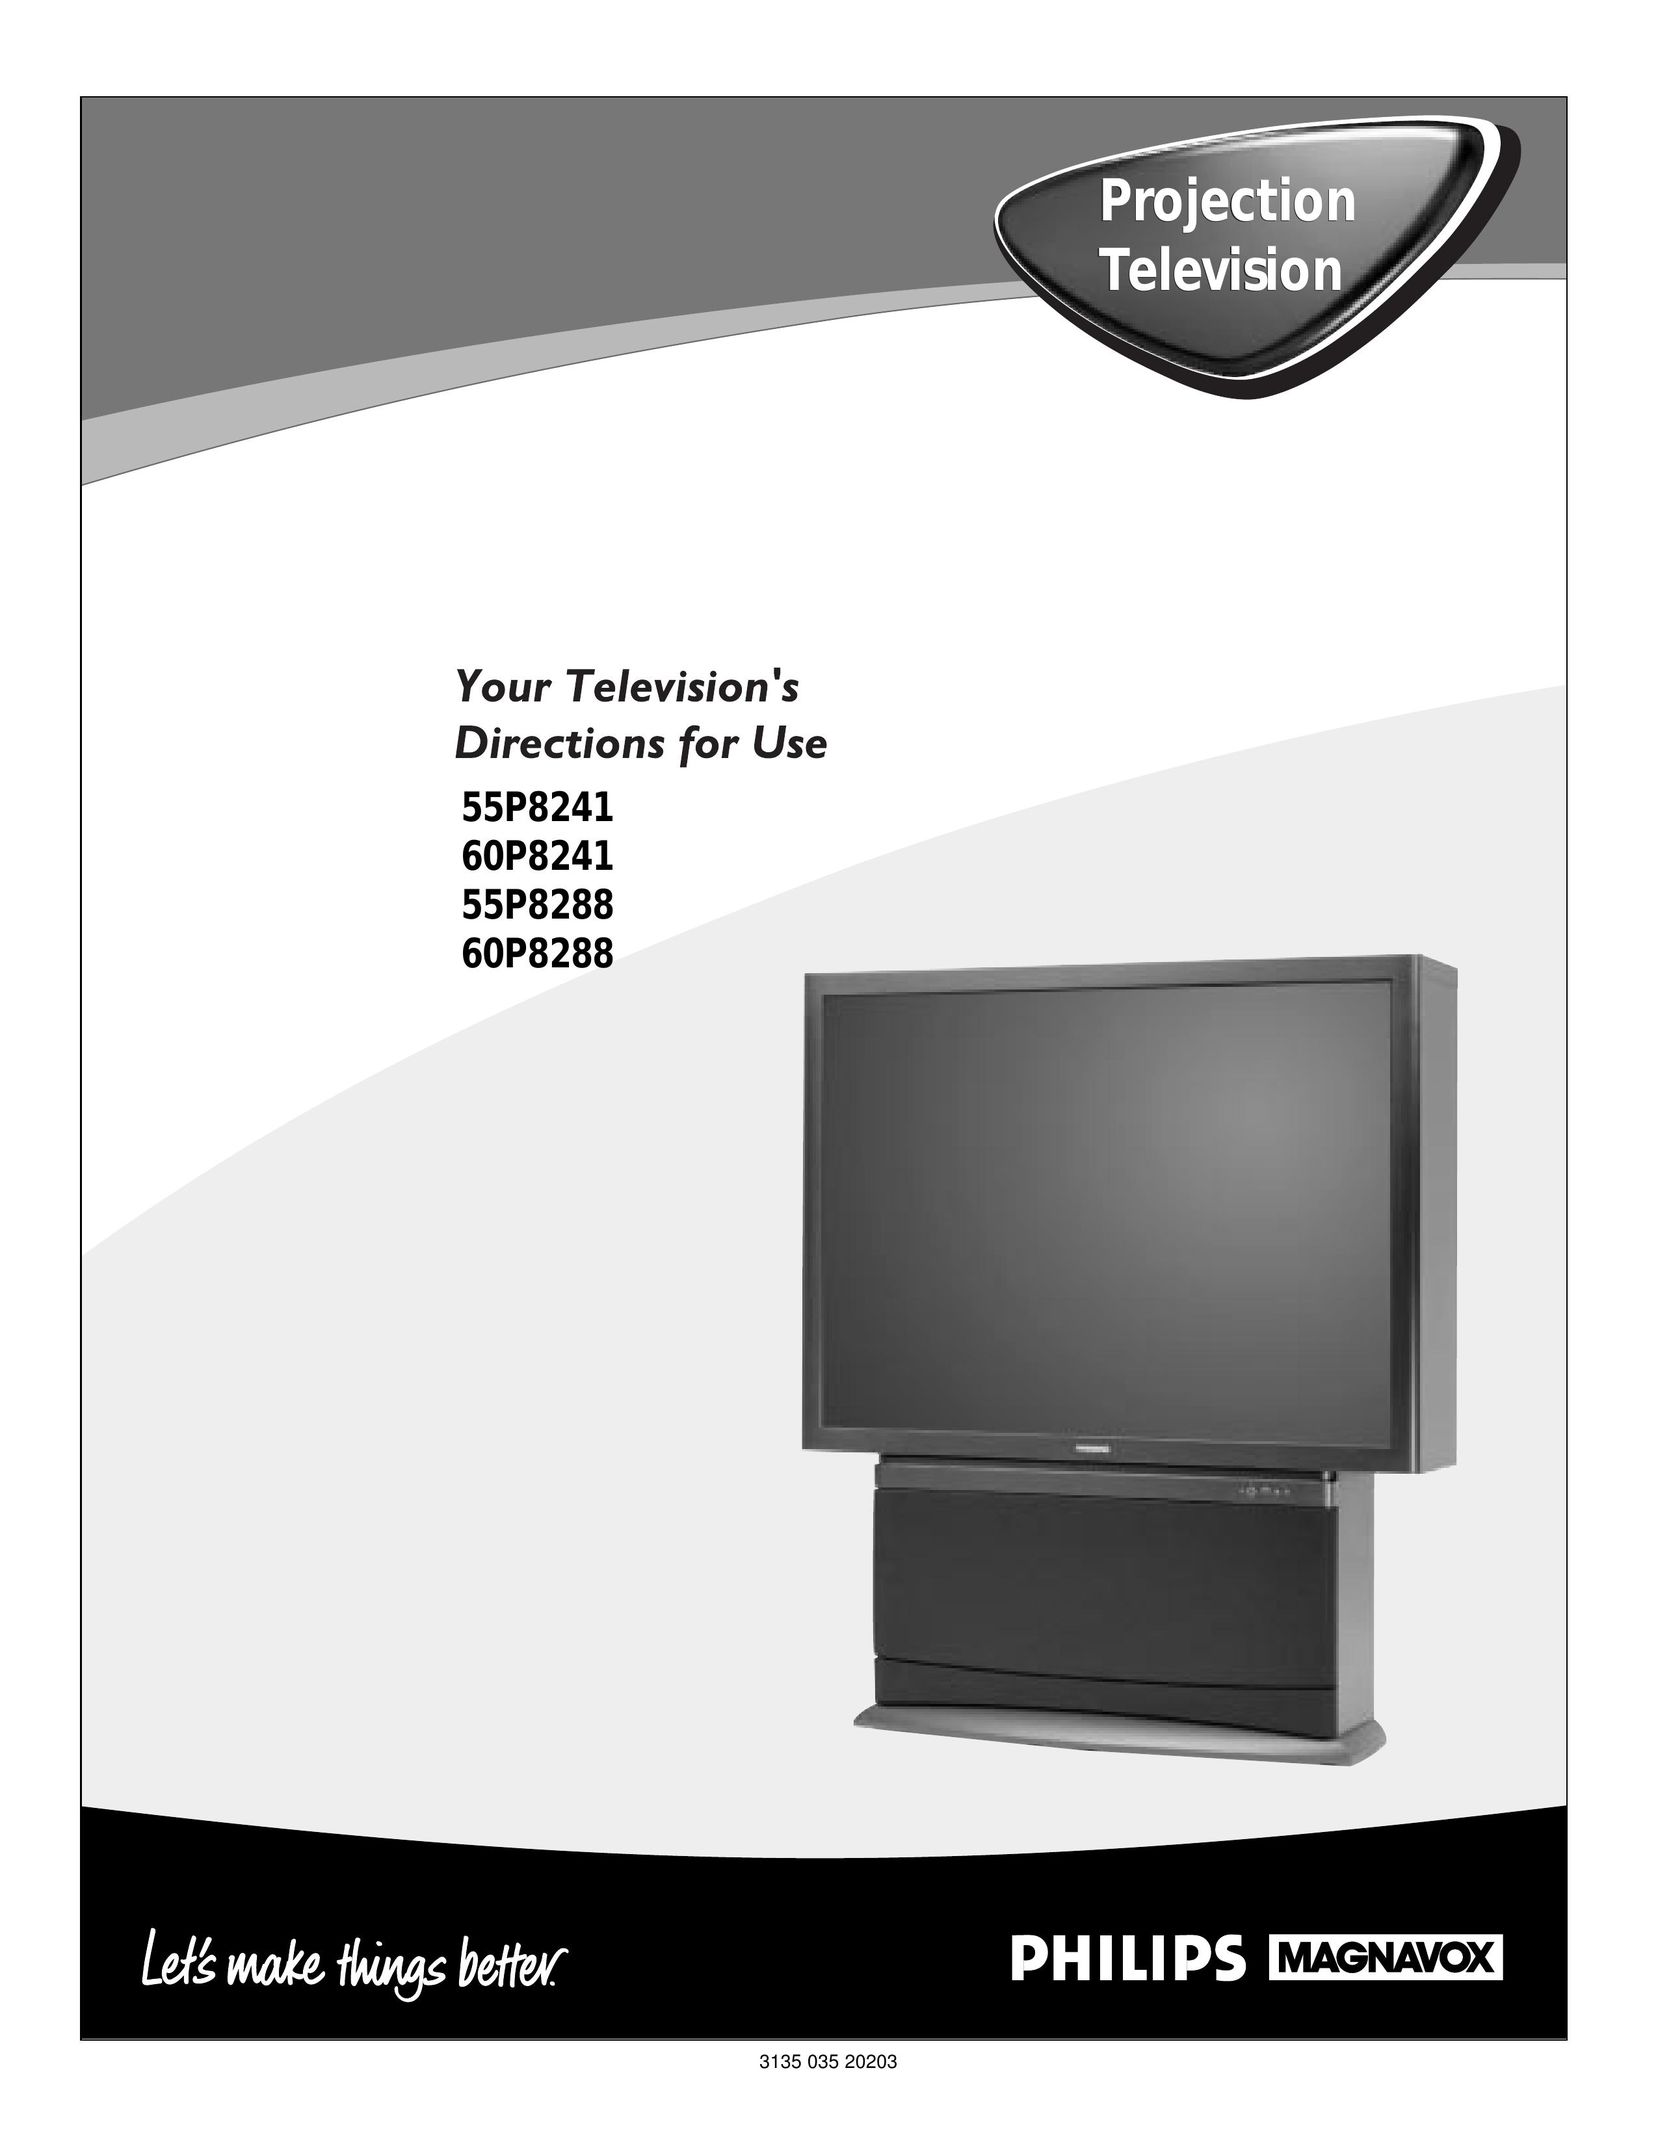 Magnavox 60p8241 CRT Television User Manual